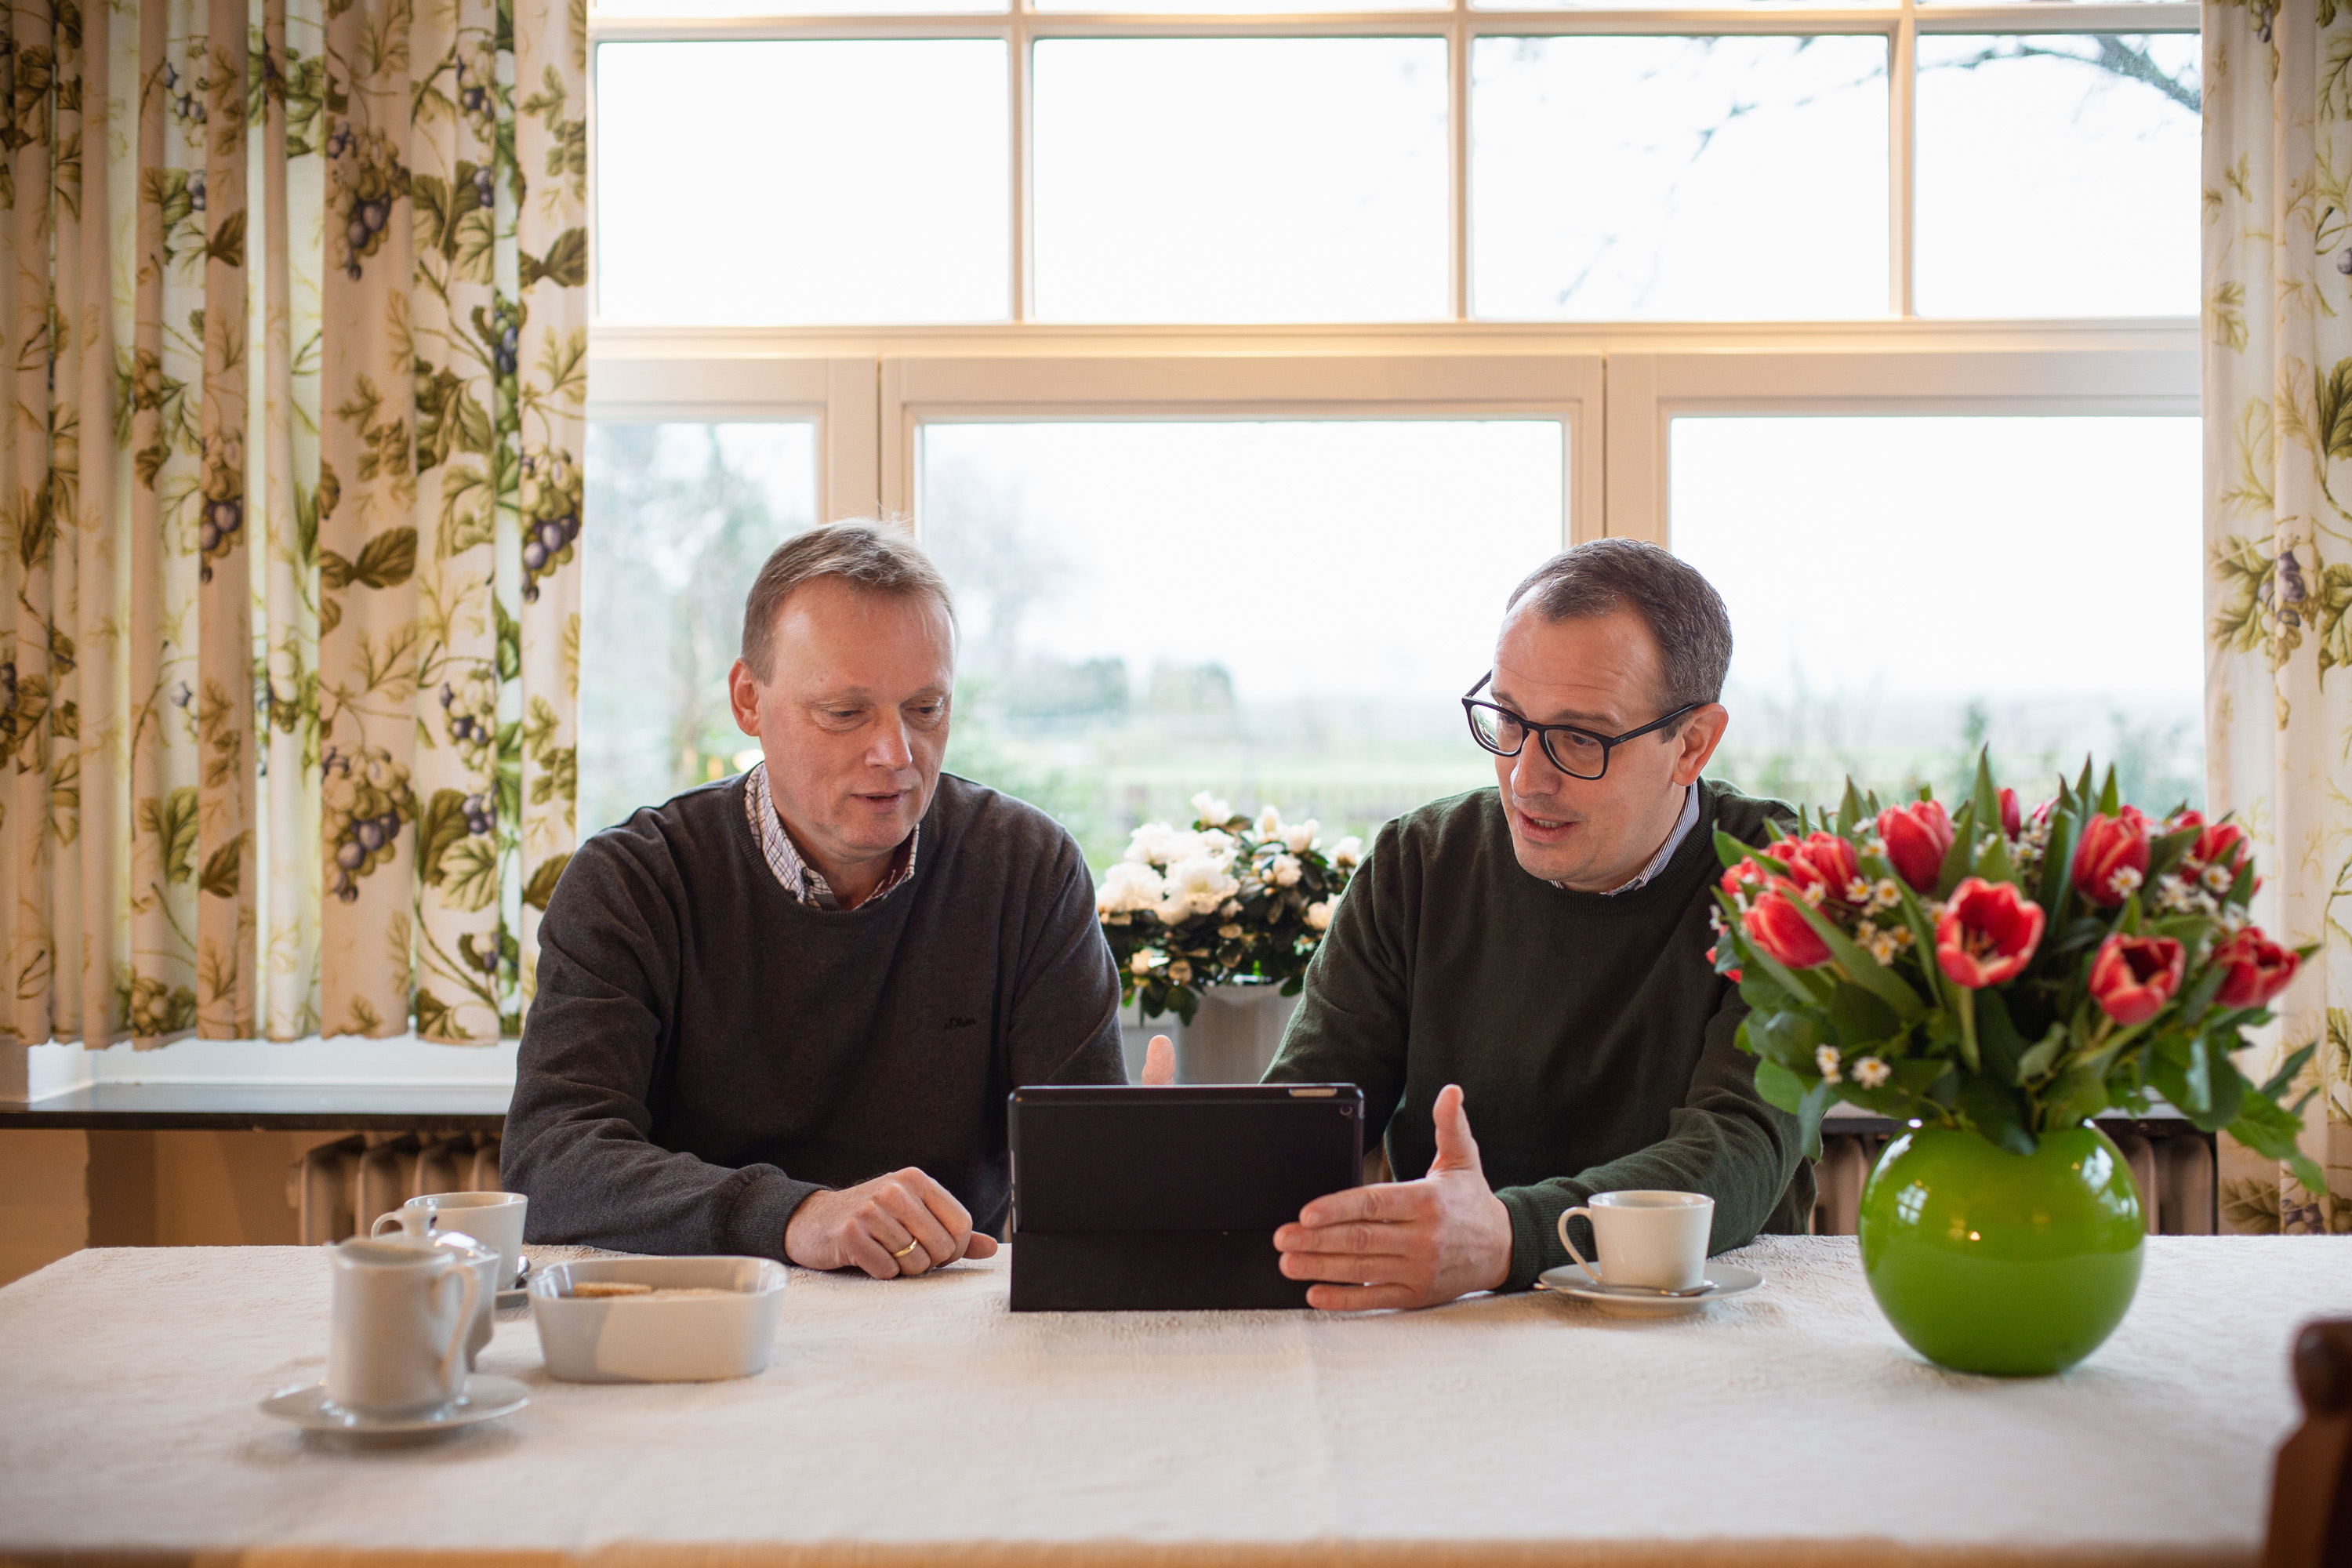 KWS seed advisor Fritz-Jürgen Lutterloh and farmer Christian Flögel sit at the coffee table and review data on an iPad.